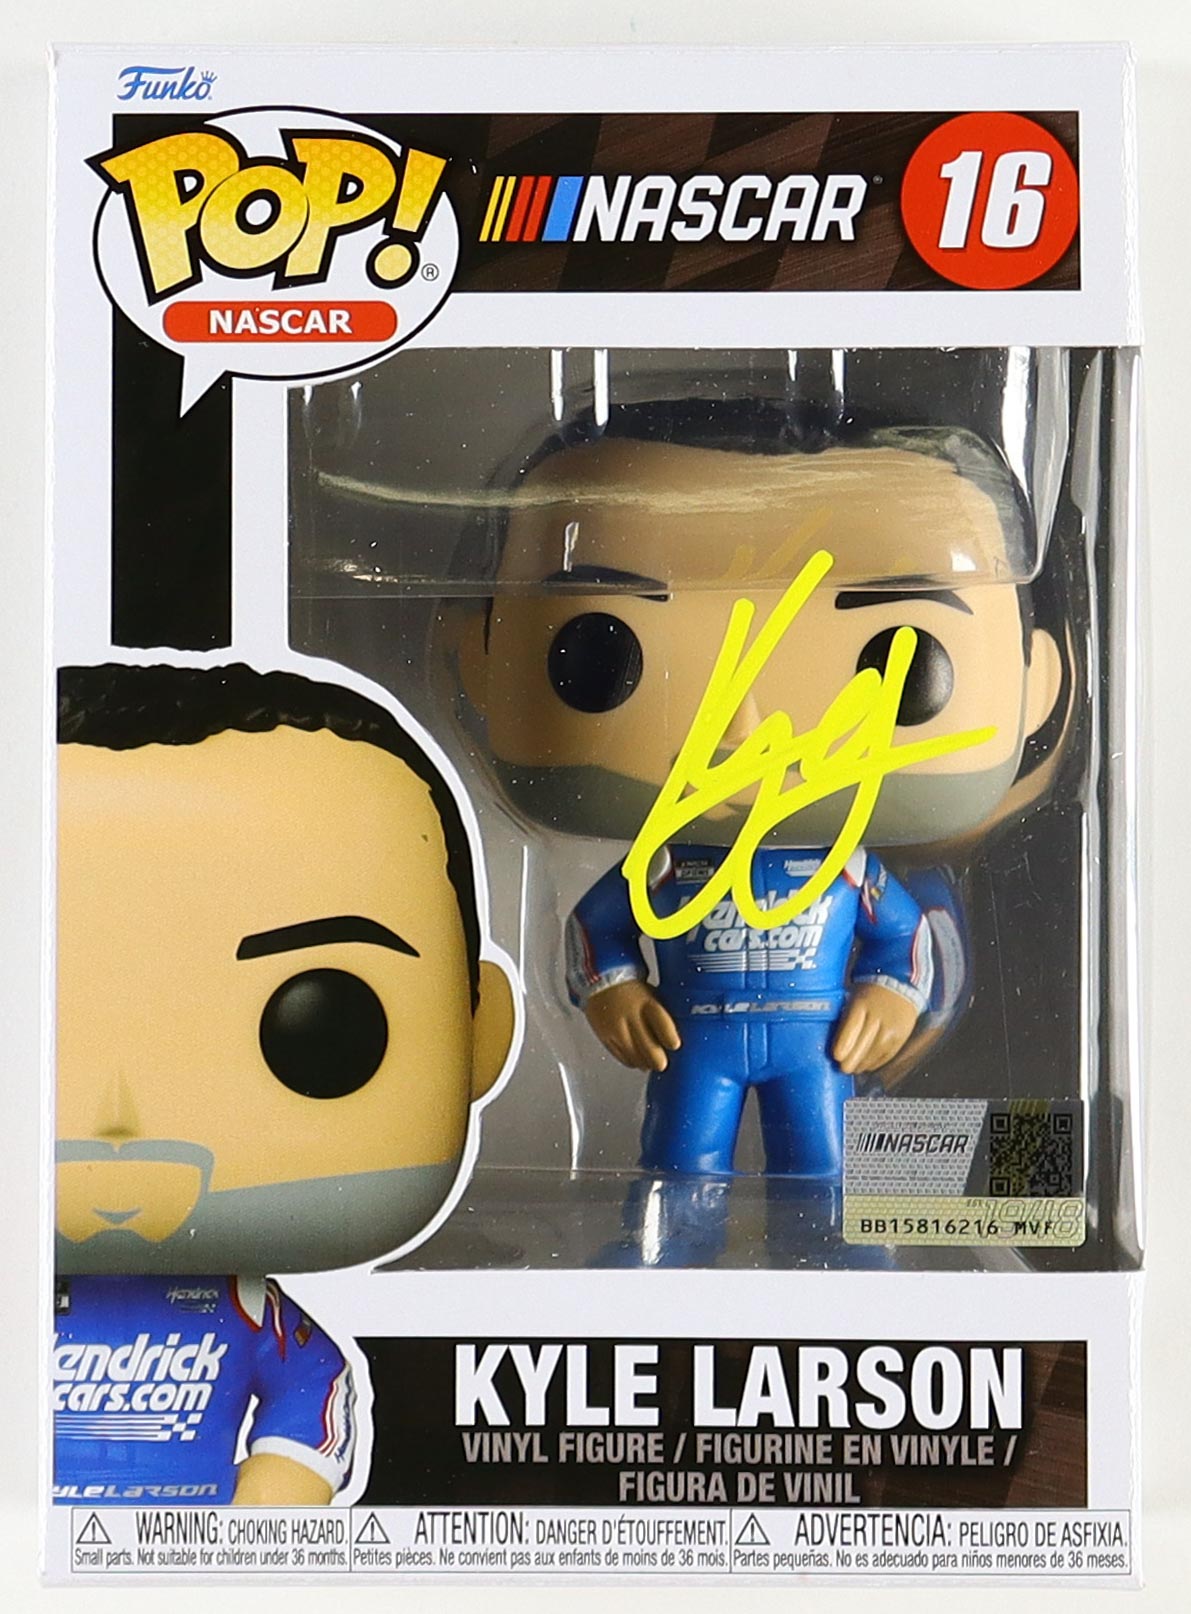 Kyle Larson Signed NASCAR #16 Funko Pop! Vinyl Figure (PA)